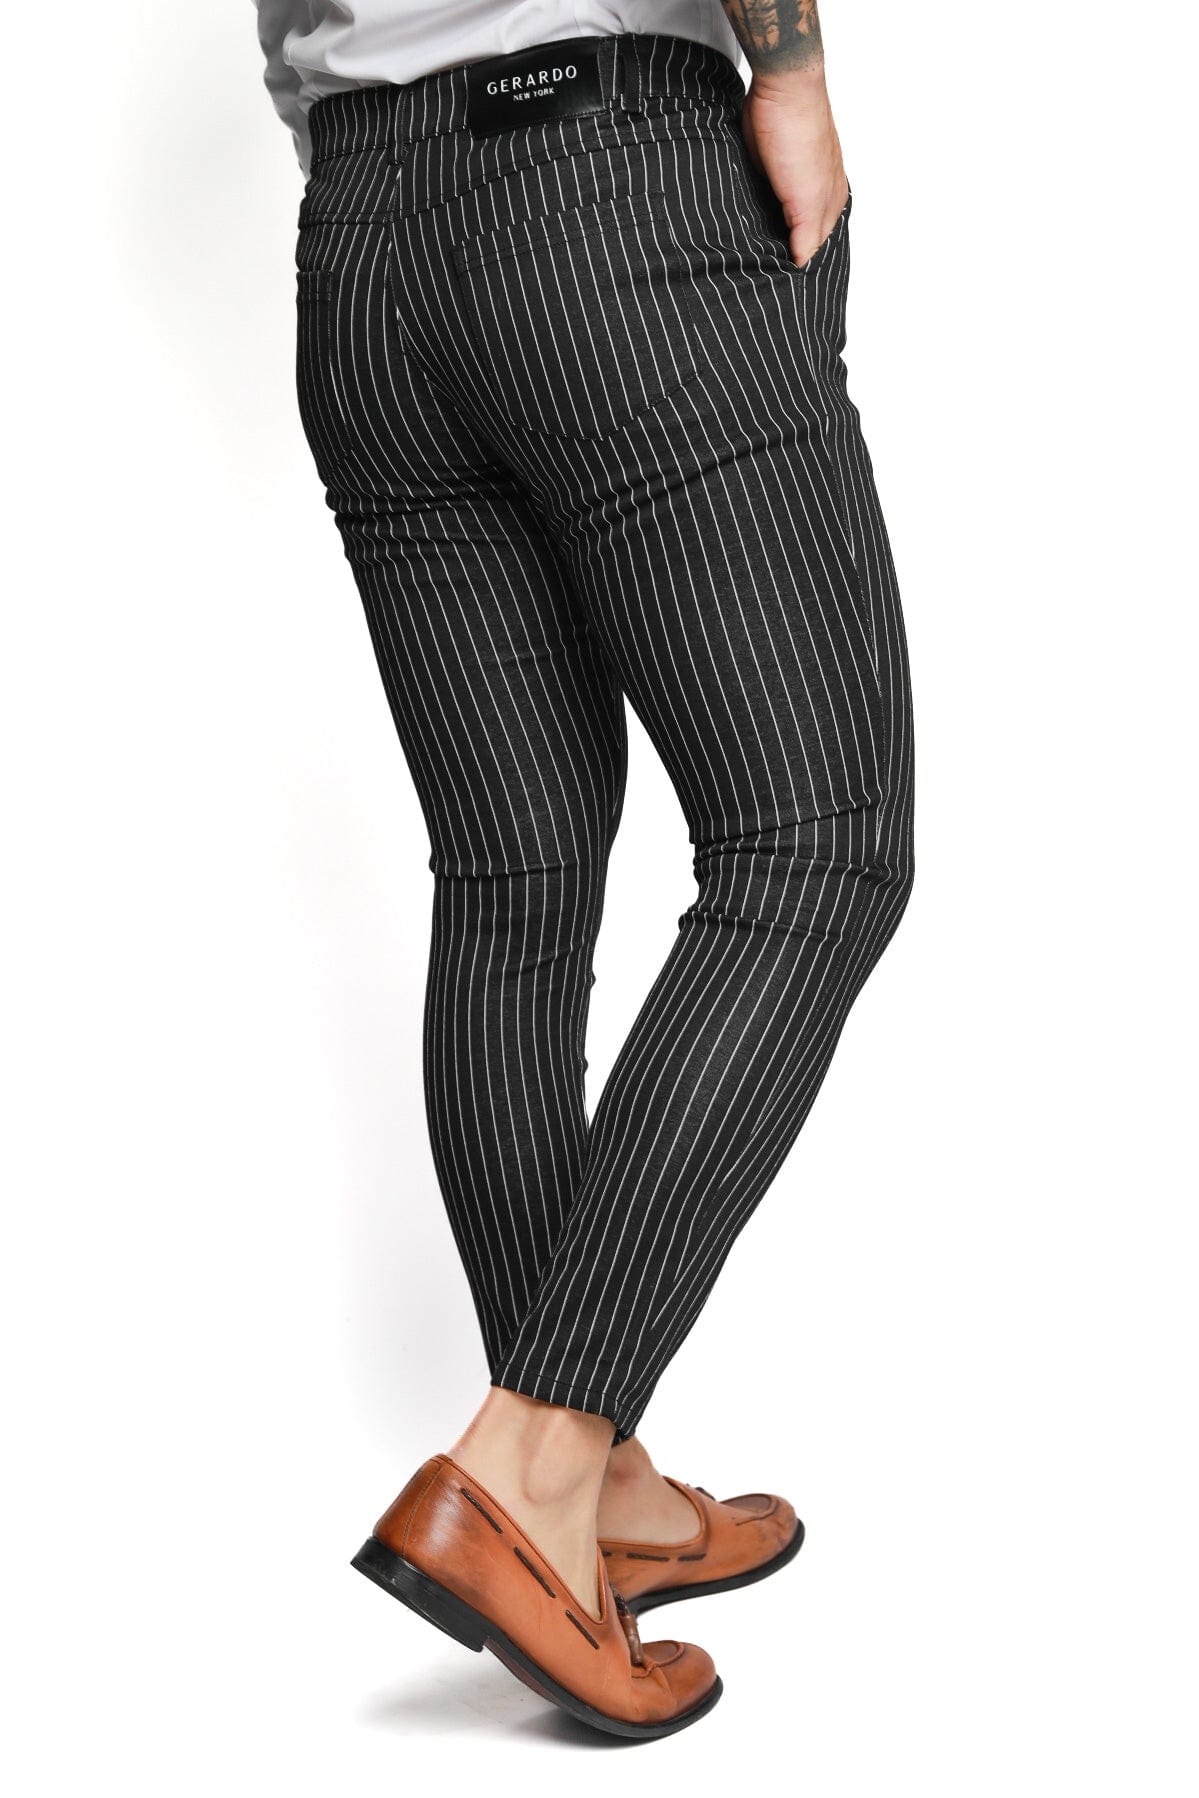 Mens Black Pinstripe Slim Fit Dress Pants - Gerardo Collection